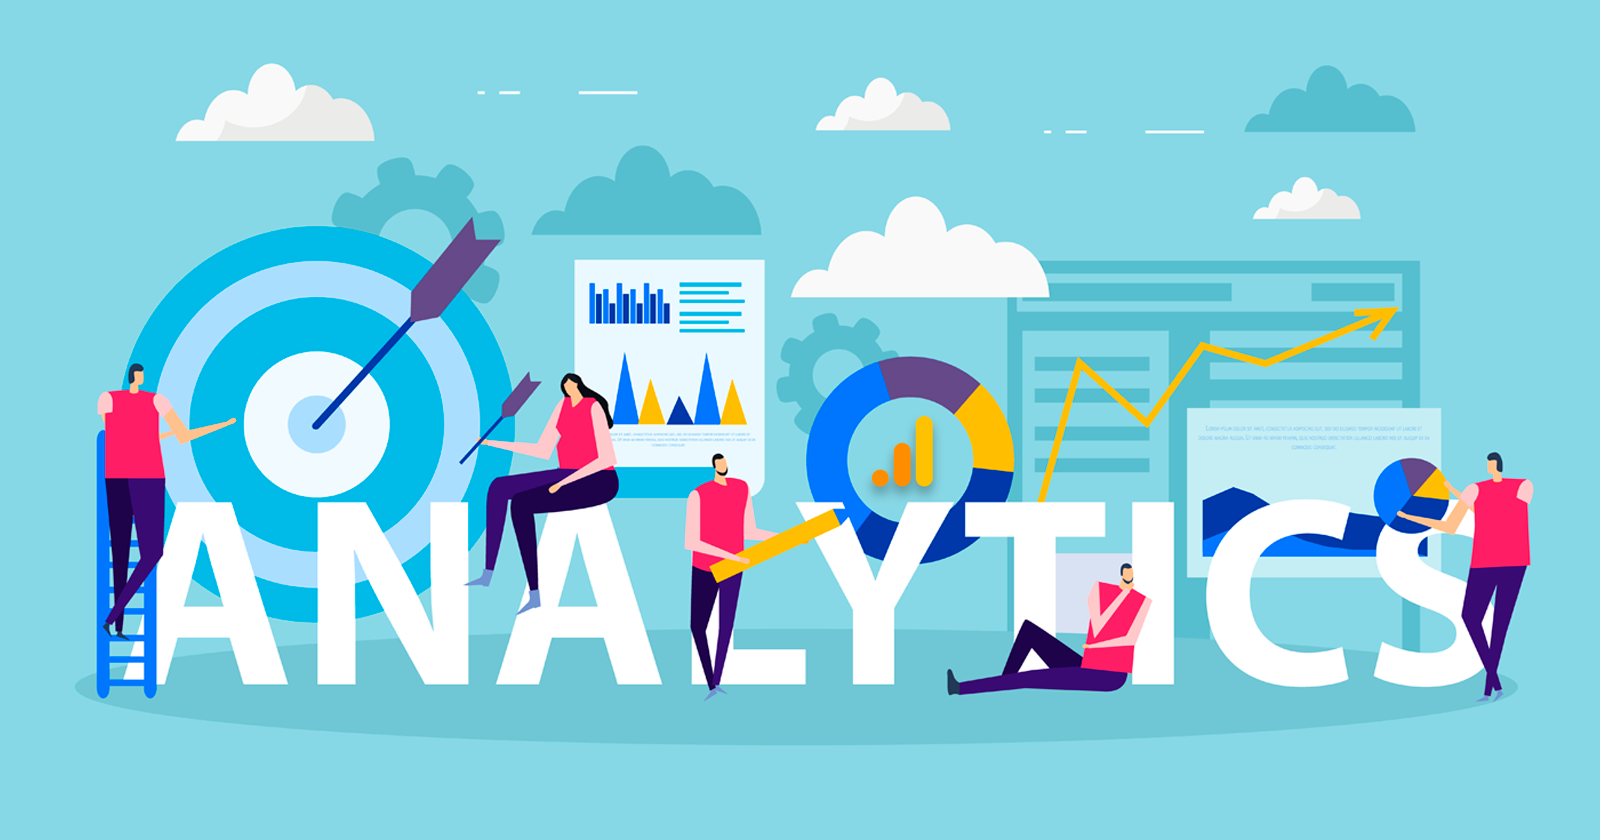 Google Analytics Goal